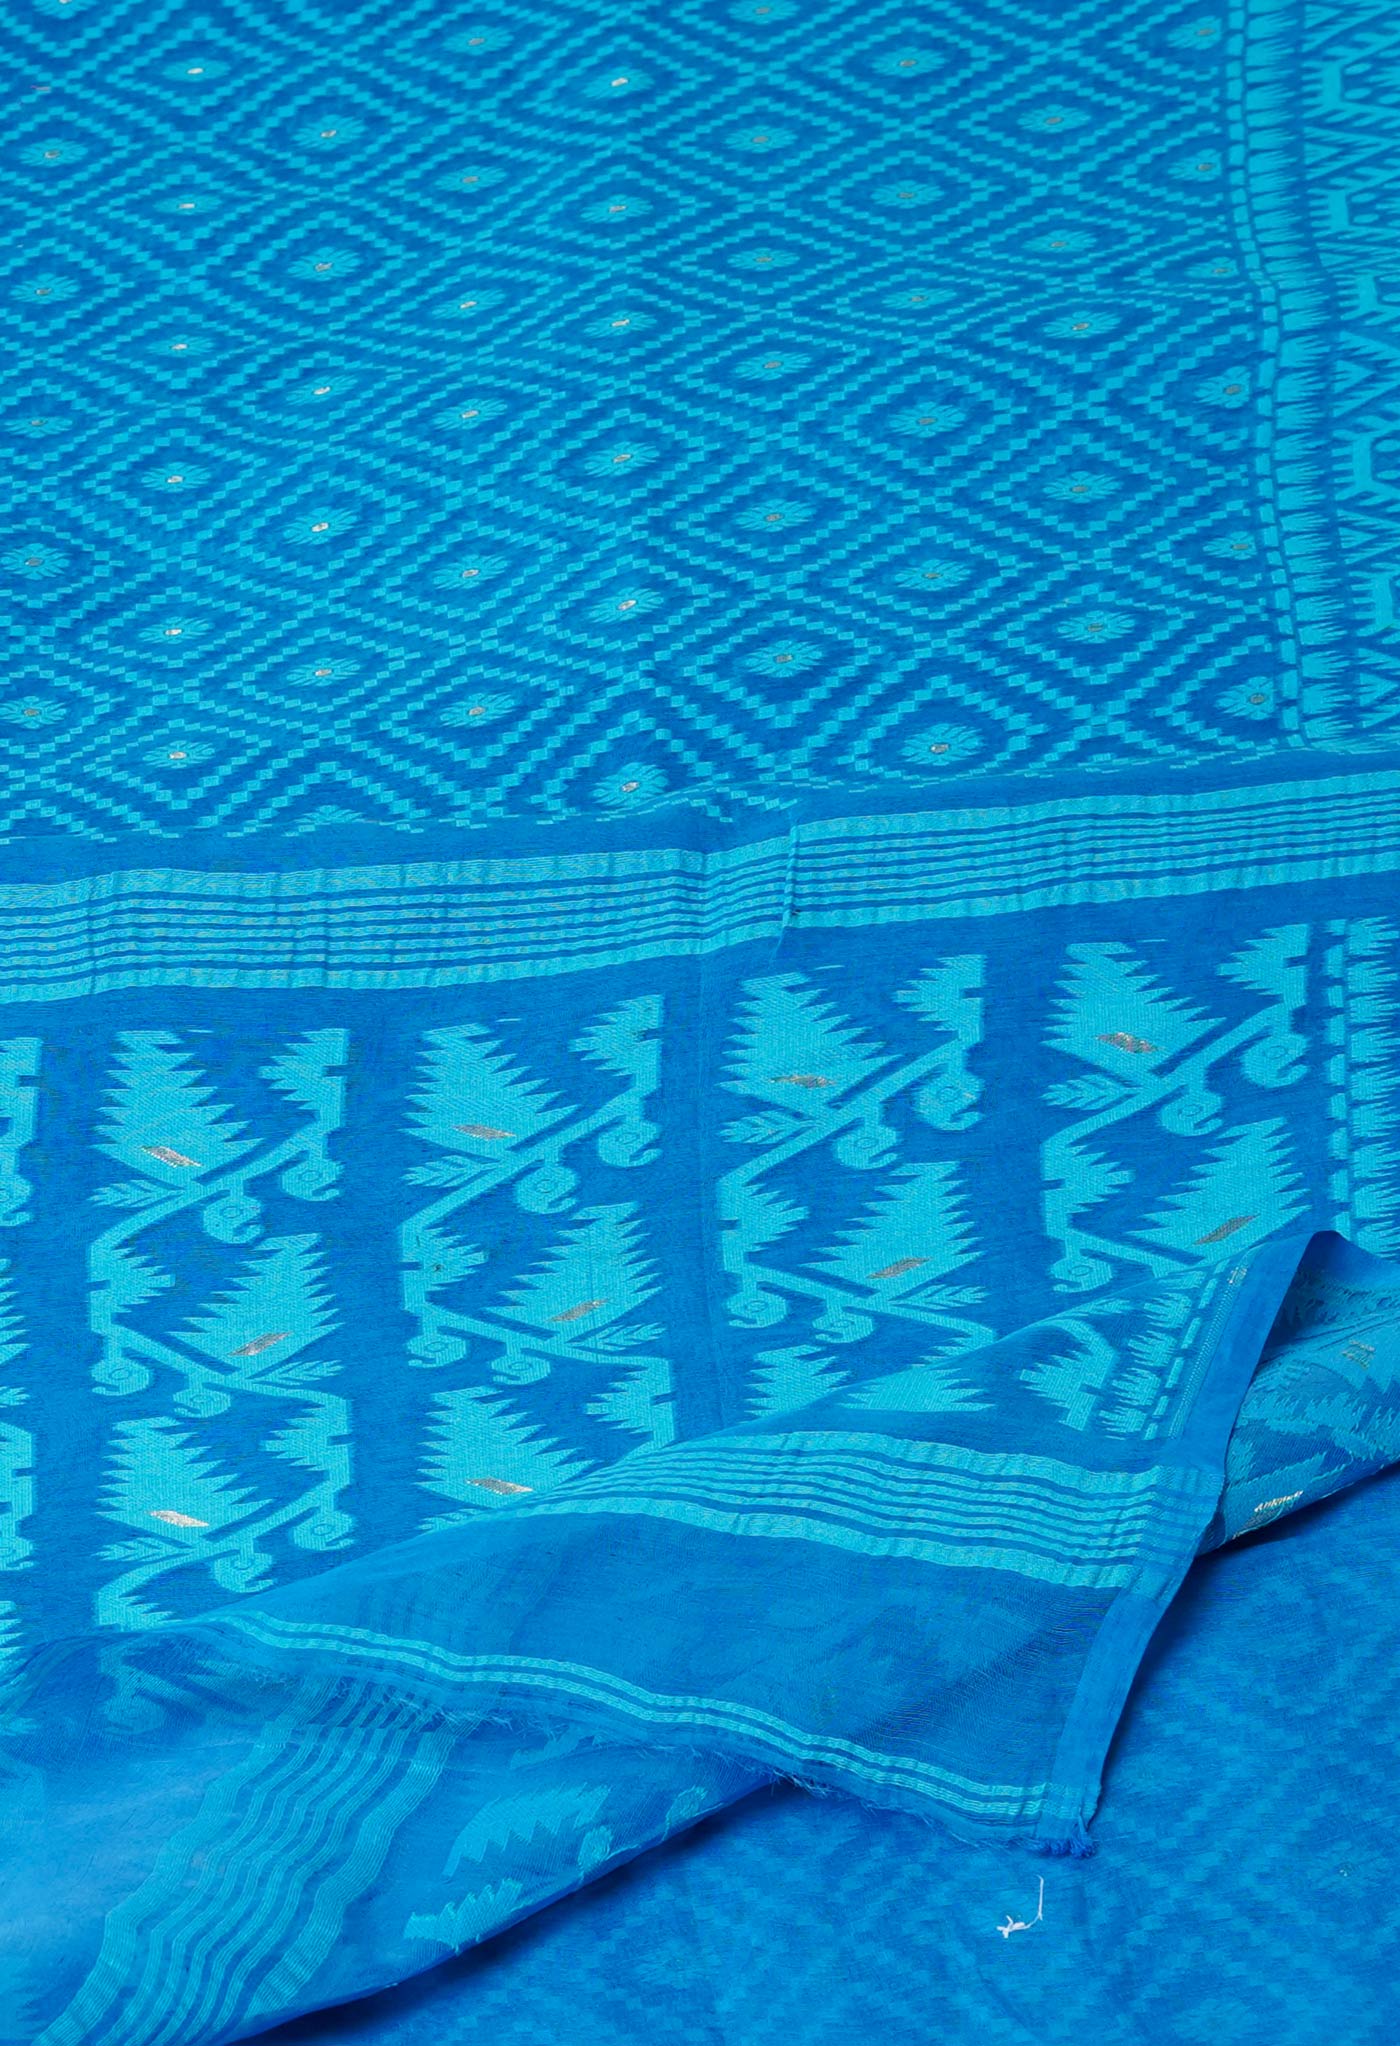 Blue Pure Handloom Handloom Dhaka Jamdhani Bengal Cotton Saree-UNM71877